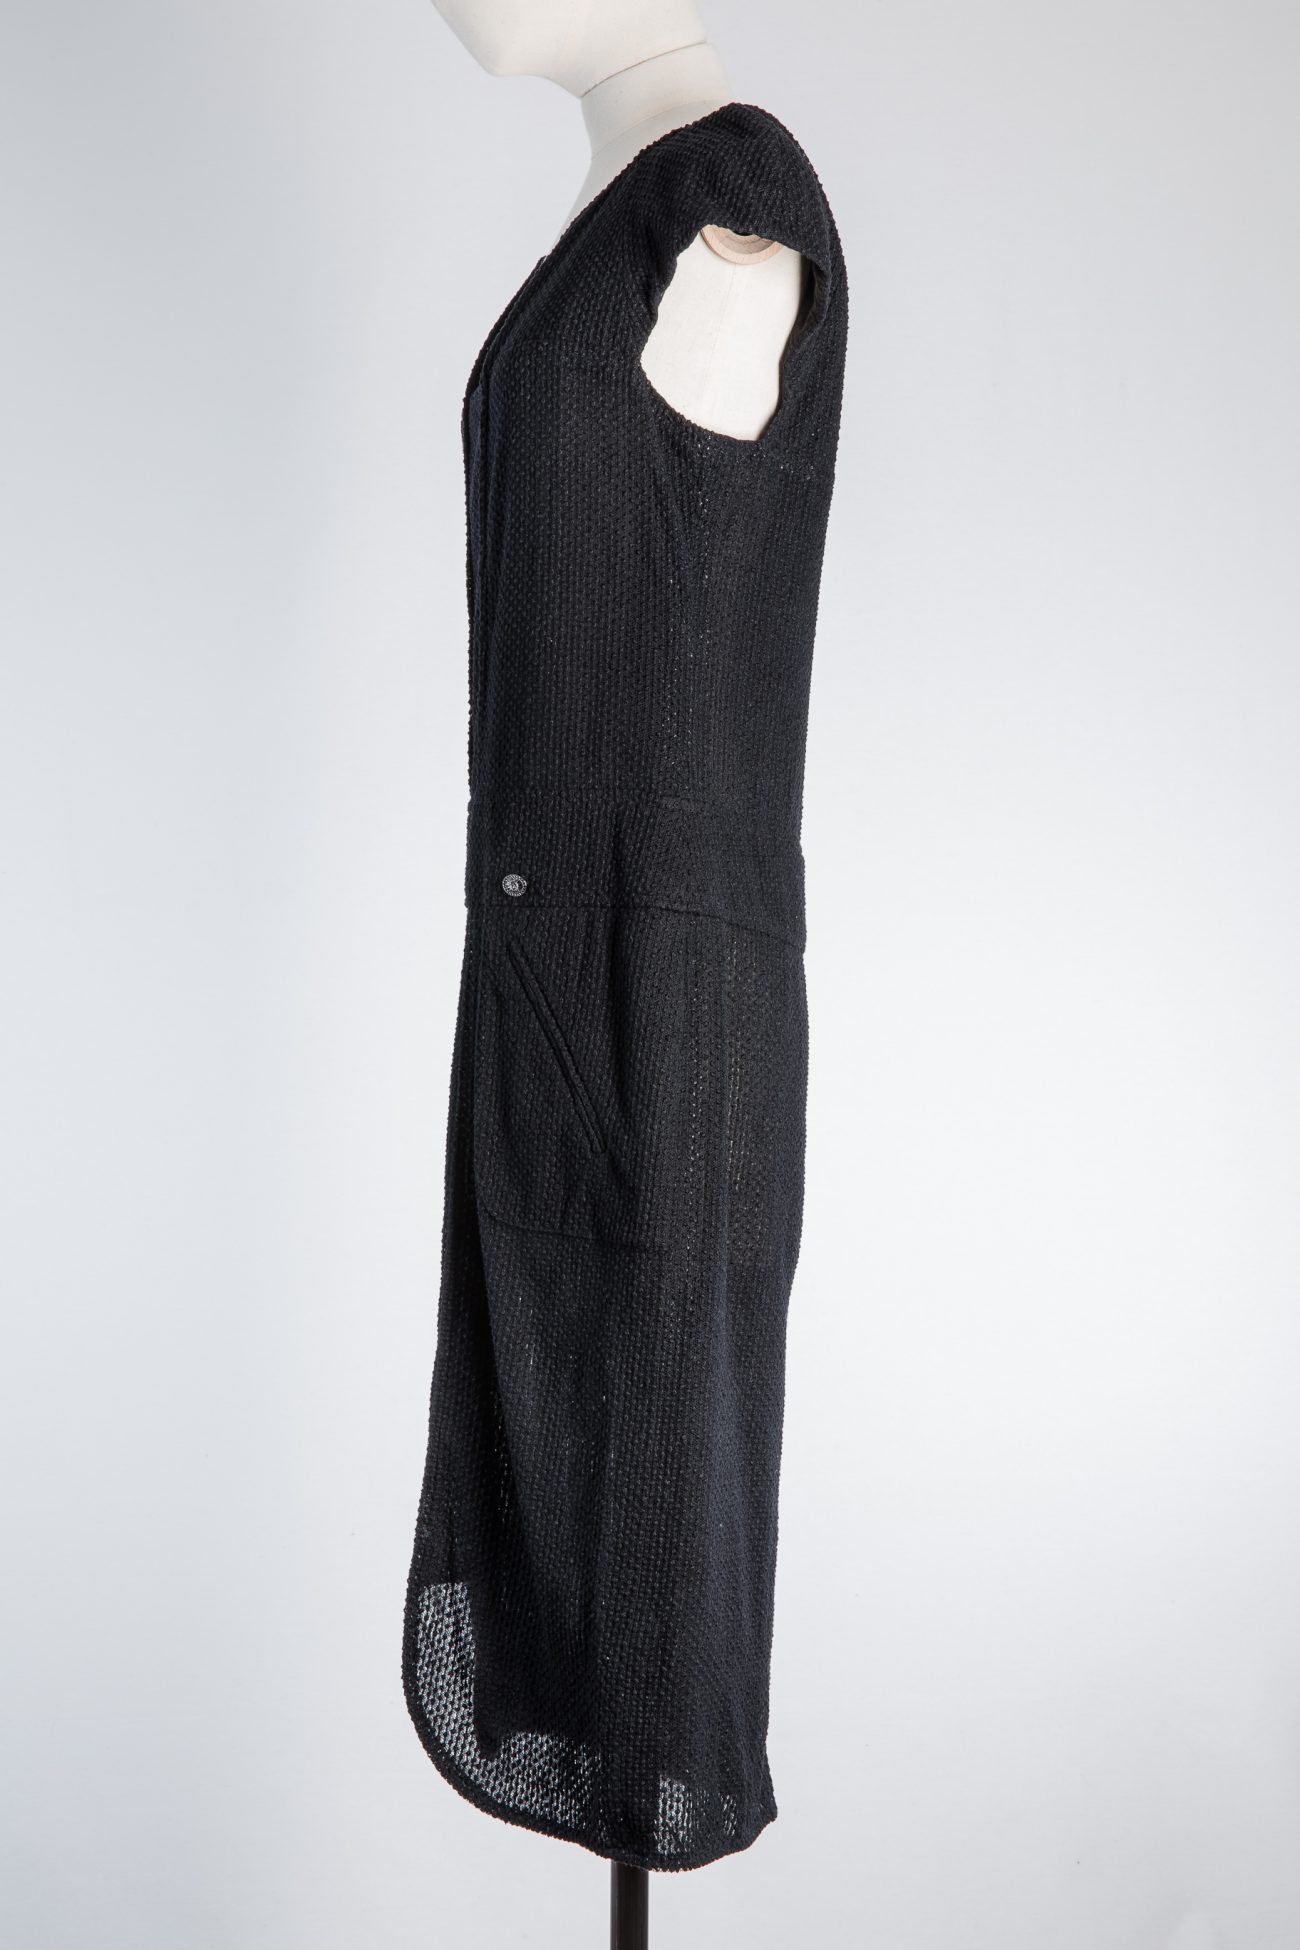 Chanel Dress, FR38 - Huntessa Luxury Online Consignment Boutique